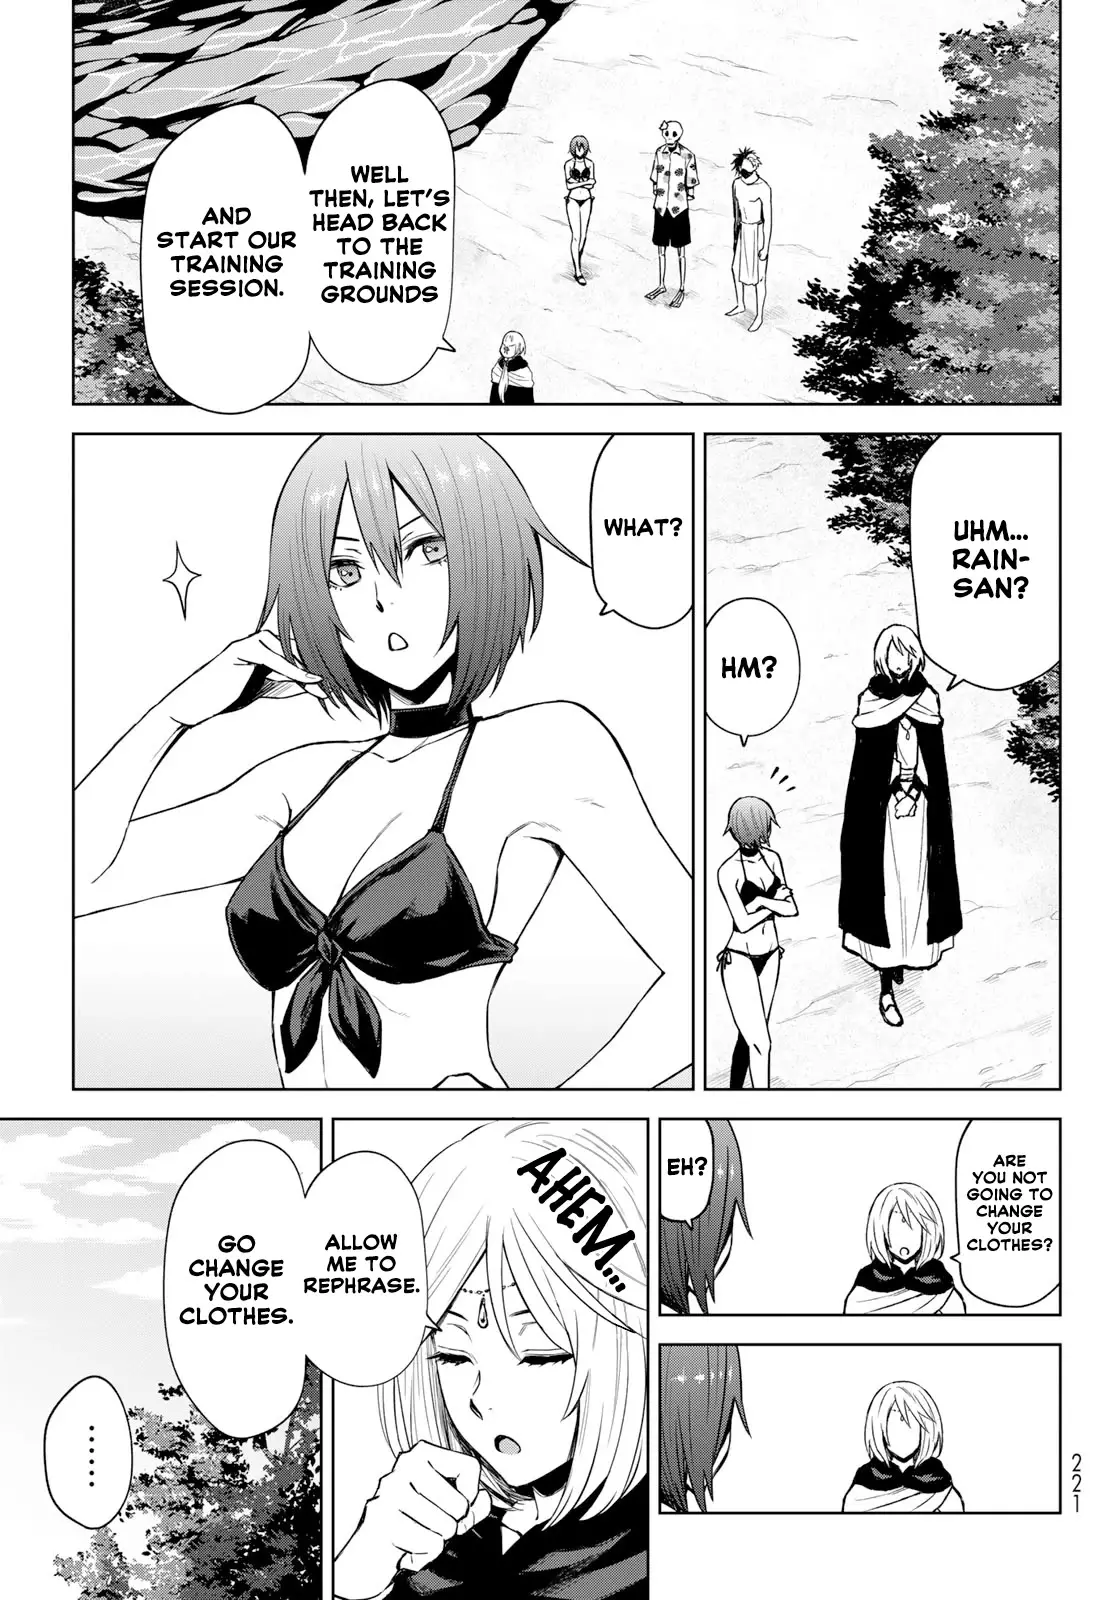 Tensei Shitara Slime Datta Ken: Clayman Revenge - 10 page 1-065164b1